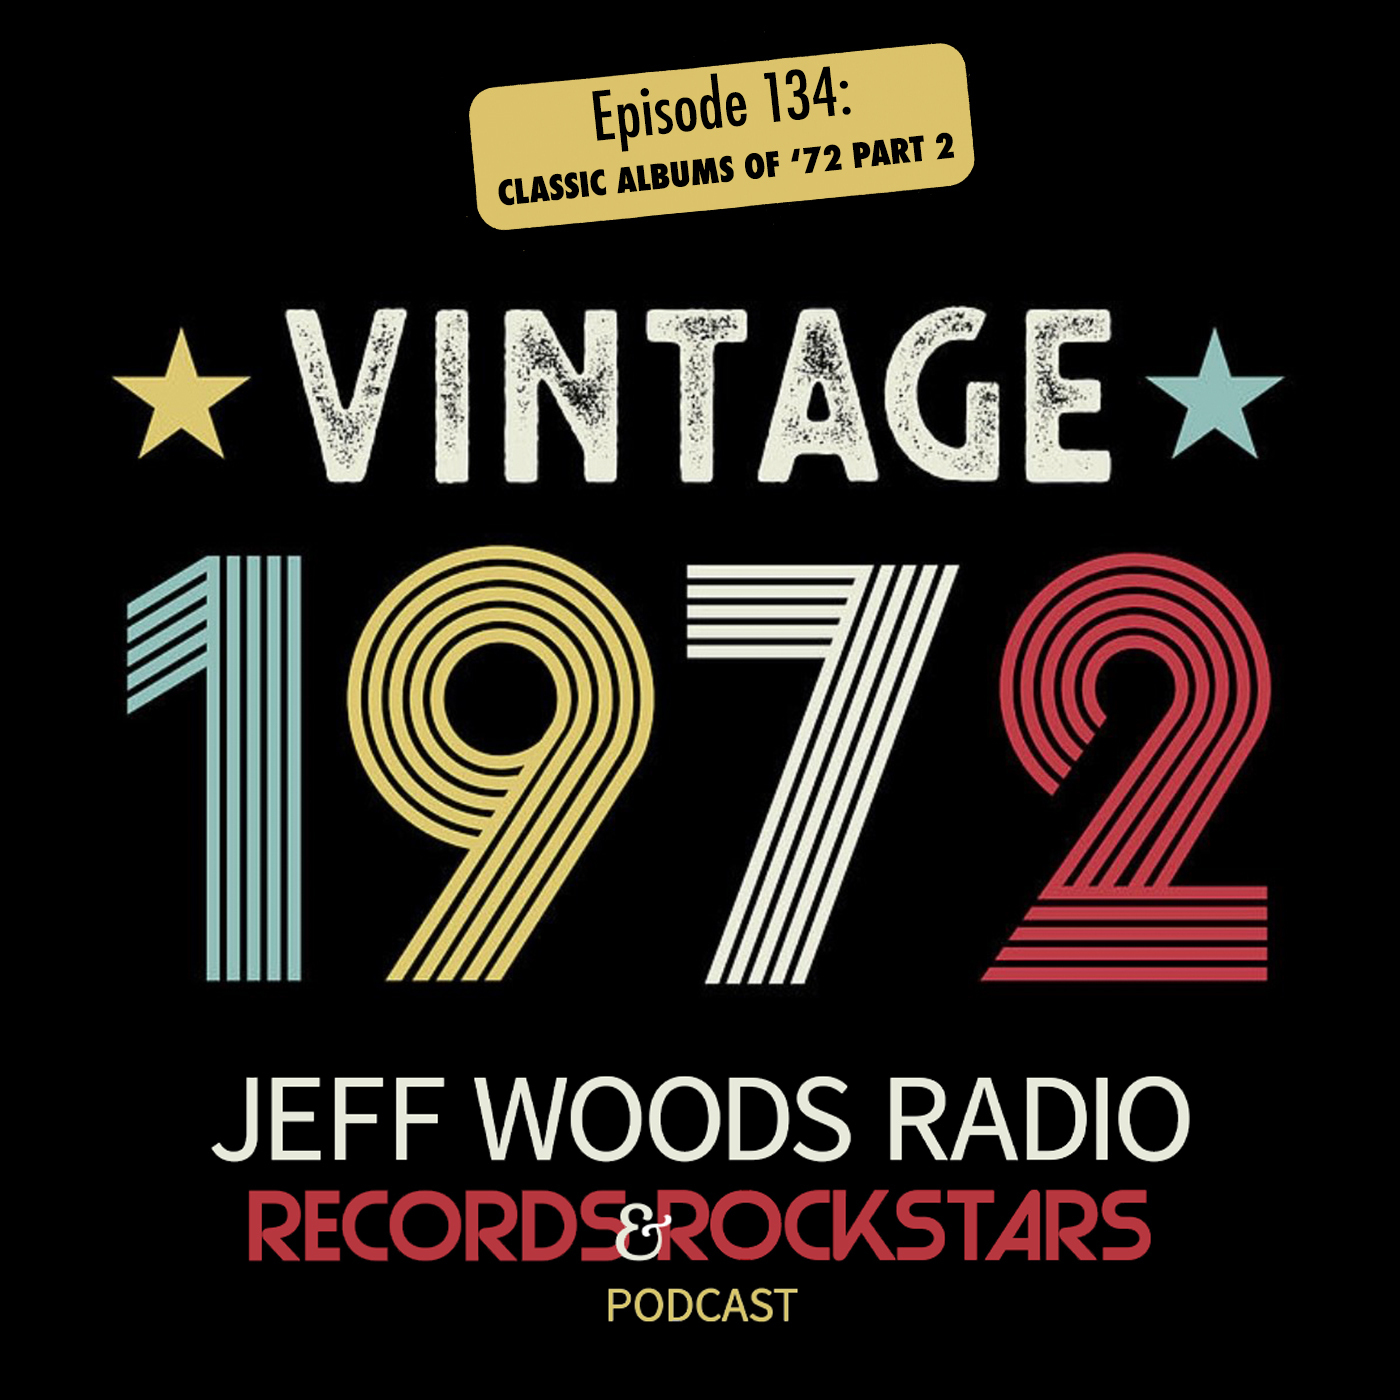 134: Classic Albums of 1972 Part 2